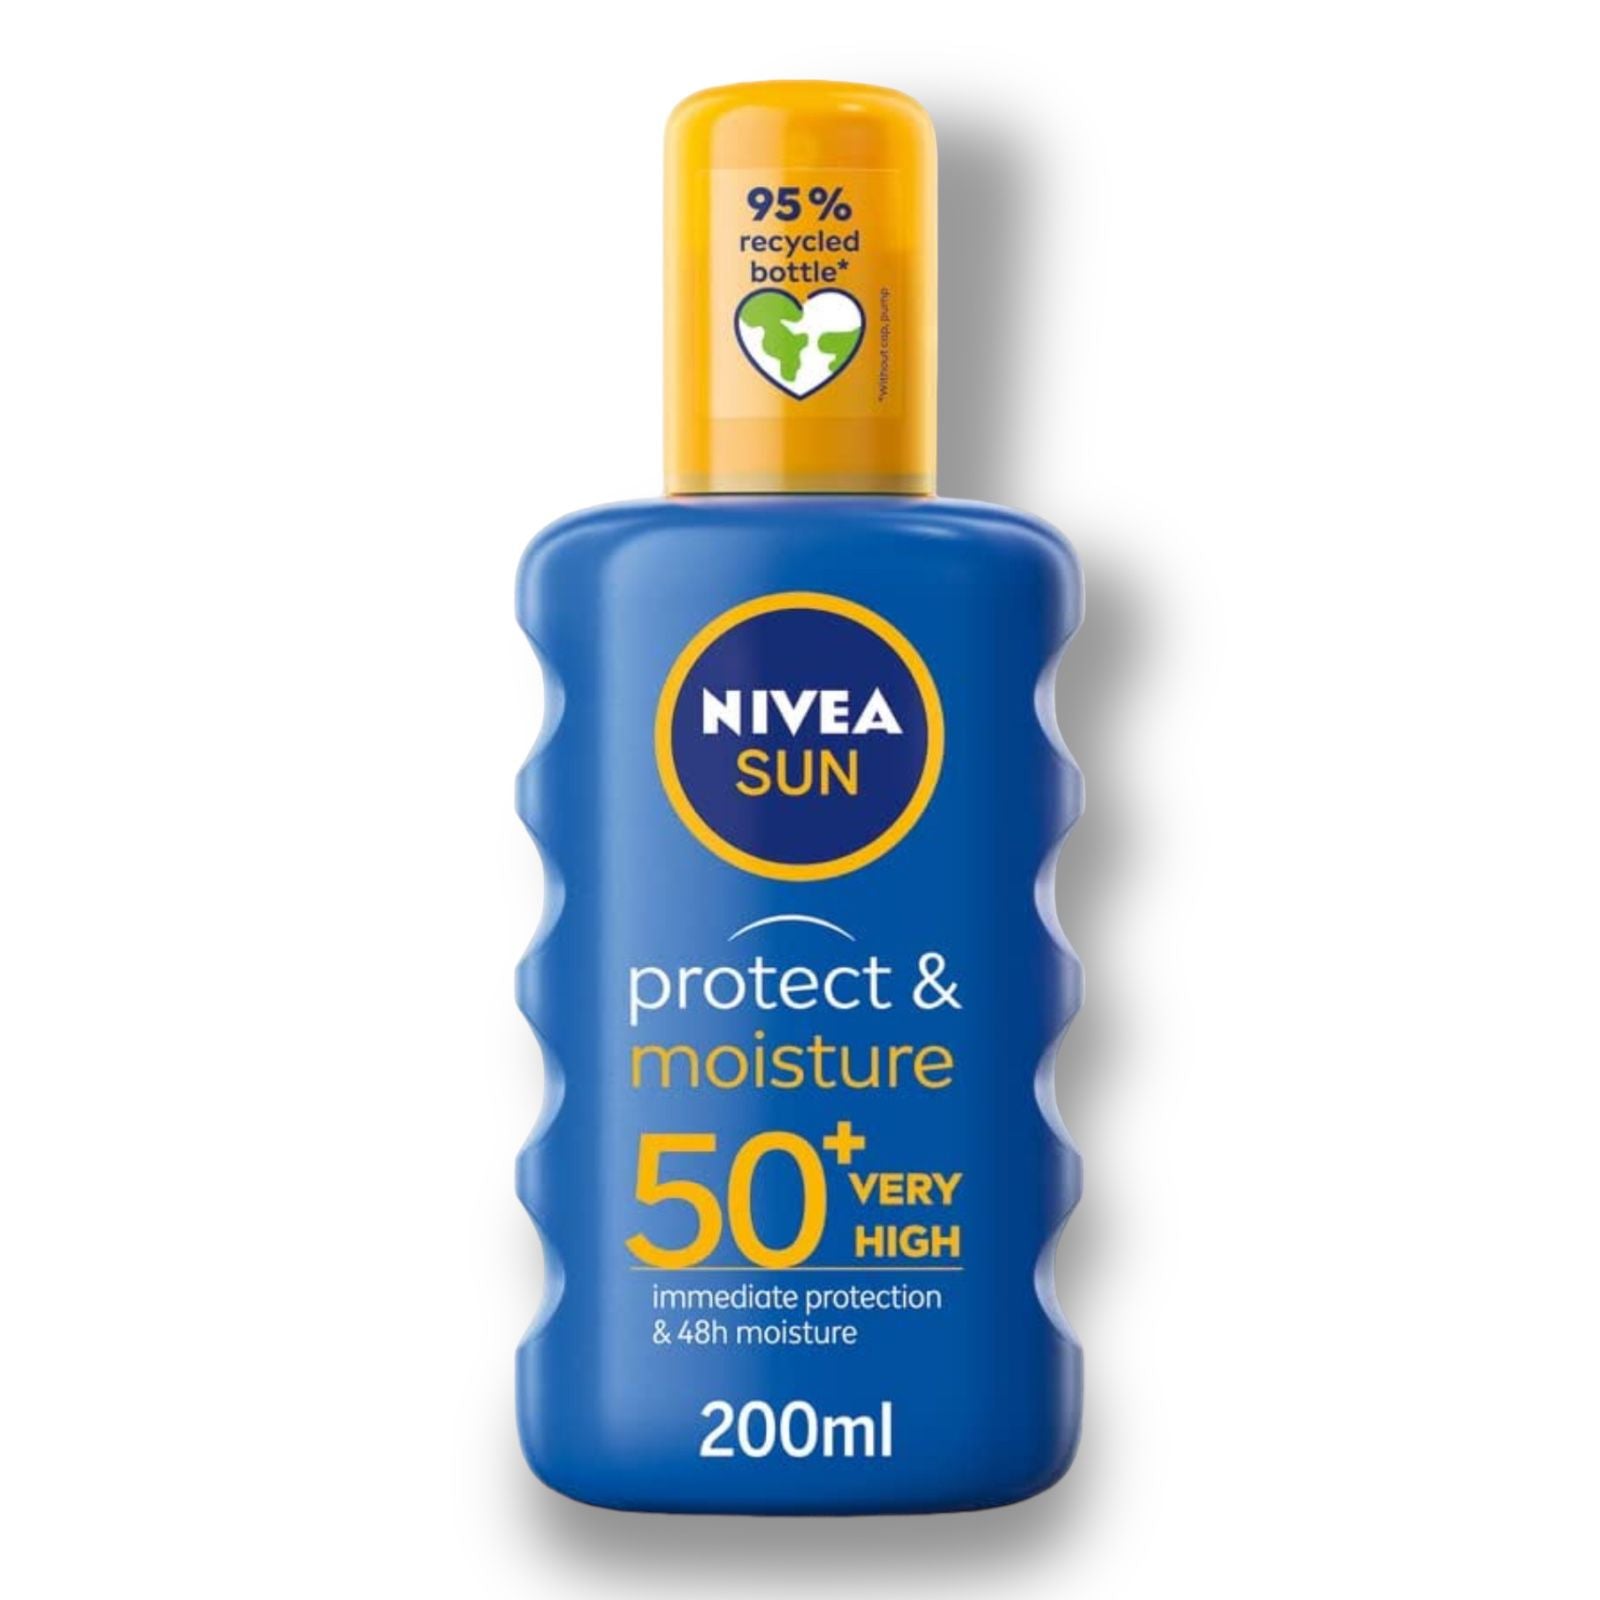 NIVEA SUN - PROTECT & MOISTURE SPF 50+ 200ml